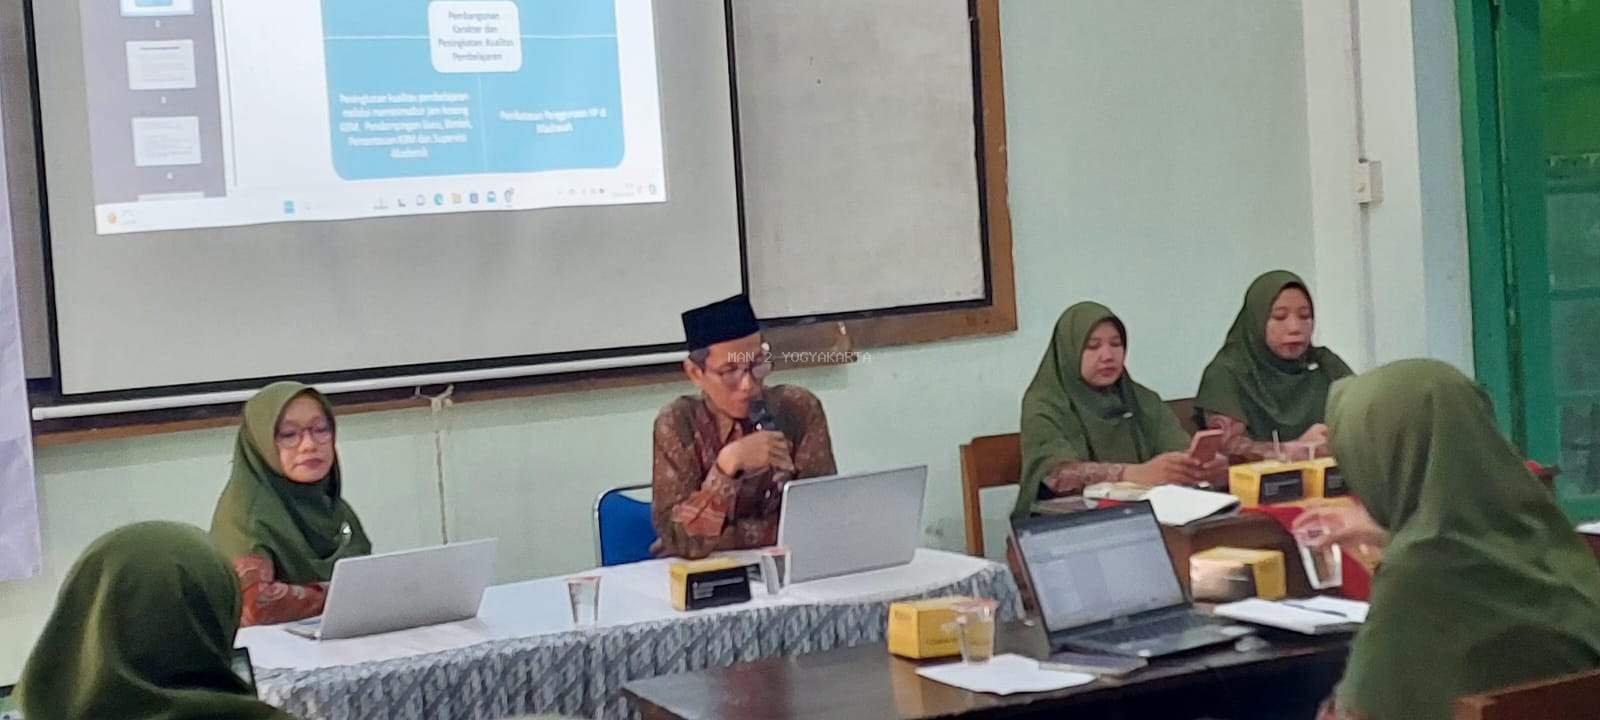 Kebijakan Budaya Prestasi dan Karakter Islami, MAN 2 Yogyakarta